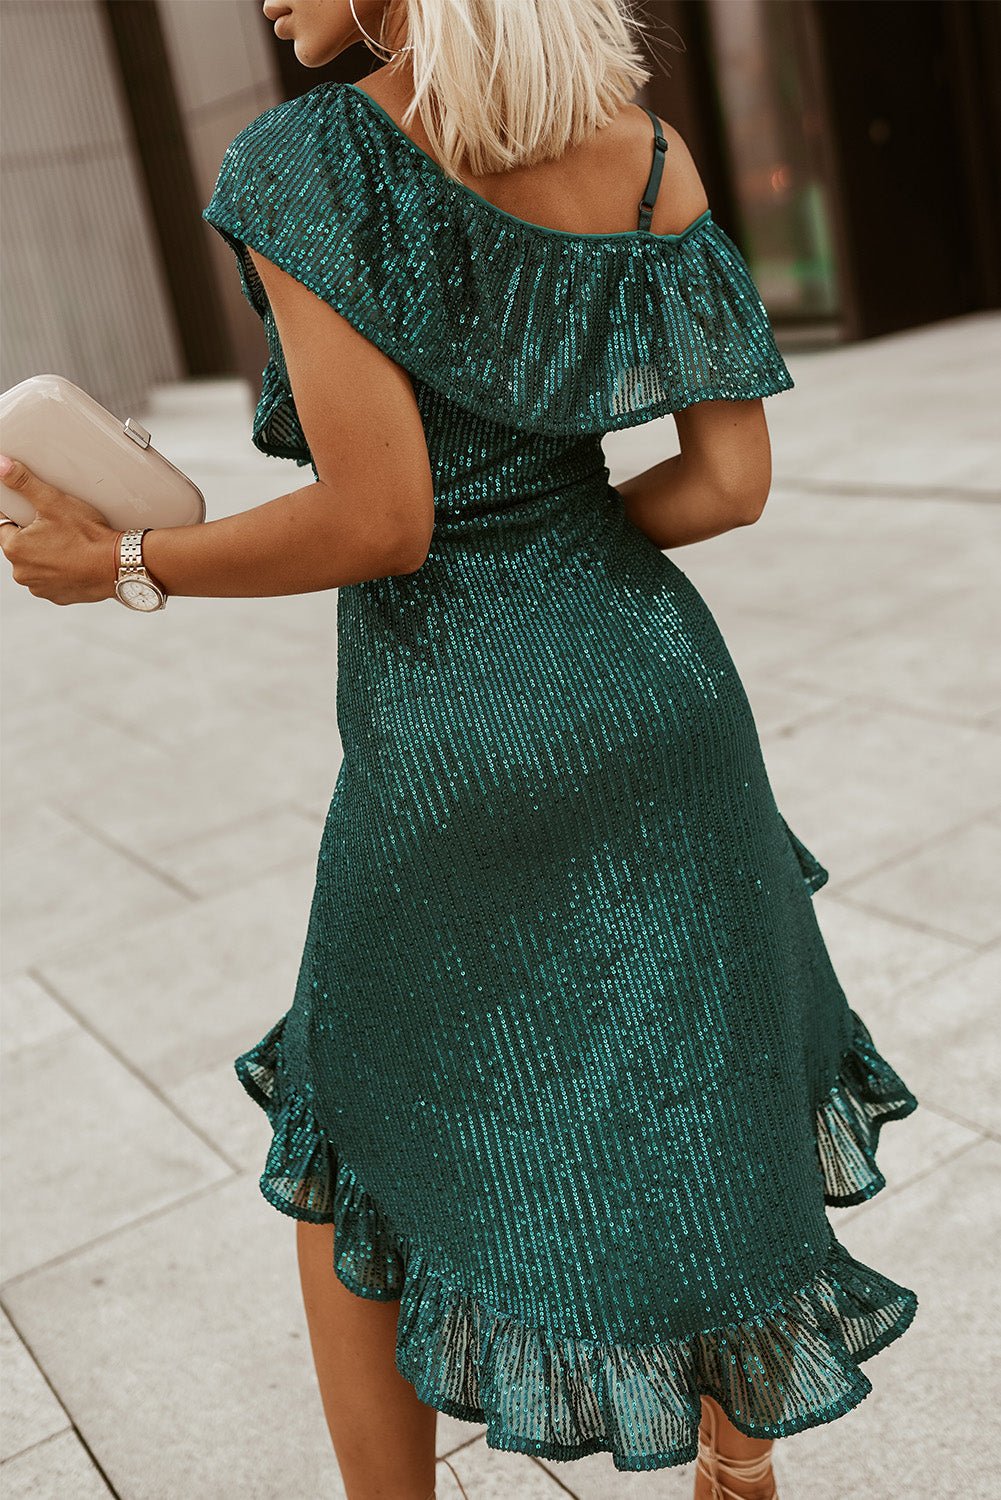 Ruffled Romance Sequin Green Dress #Firefly Lane Boutique1